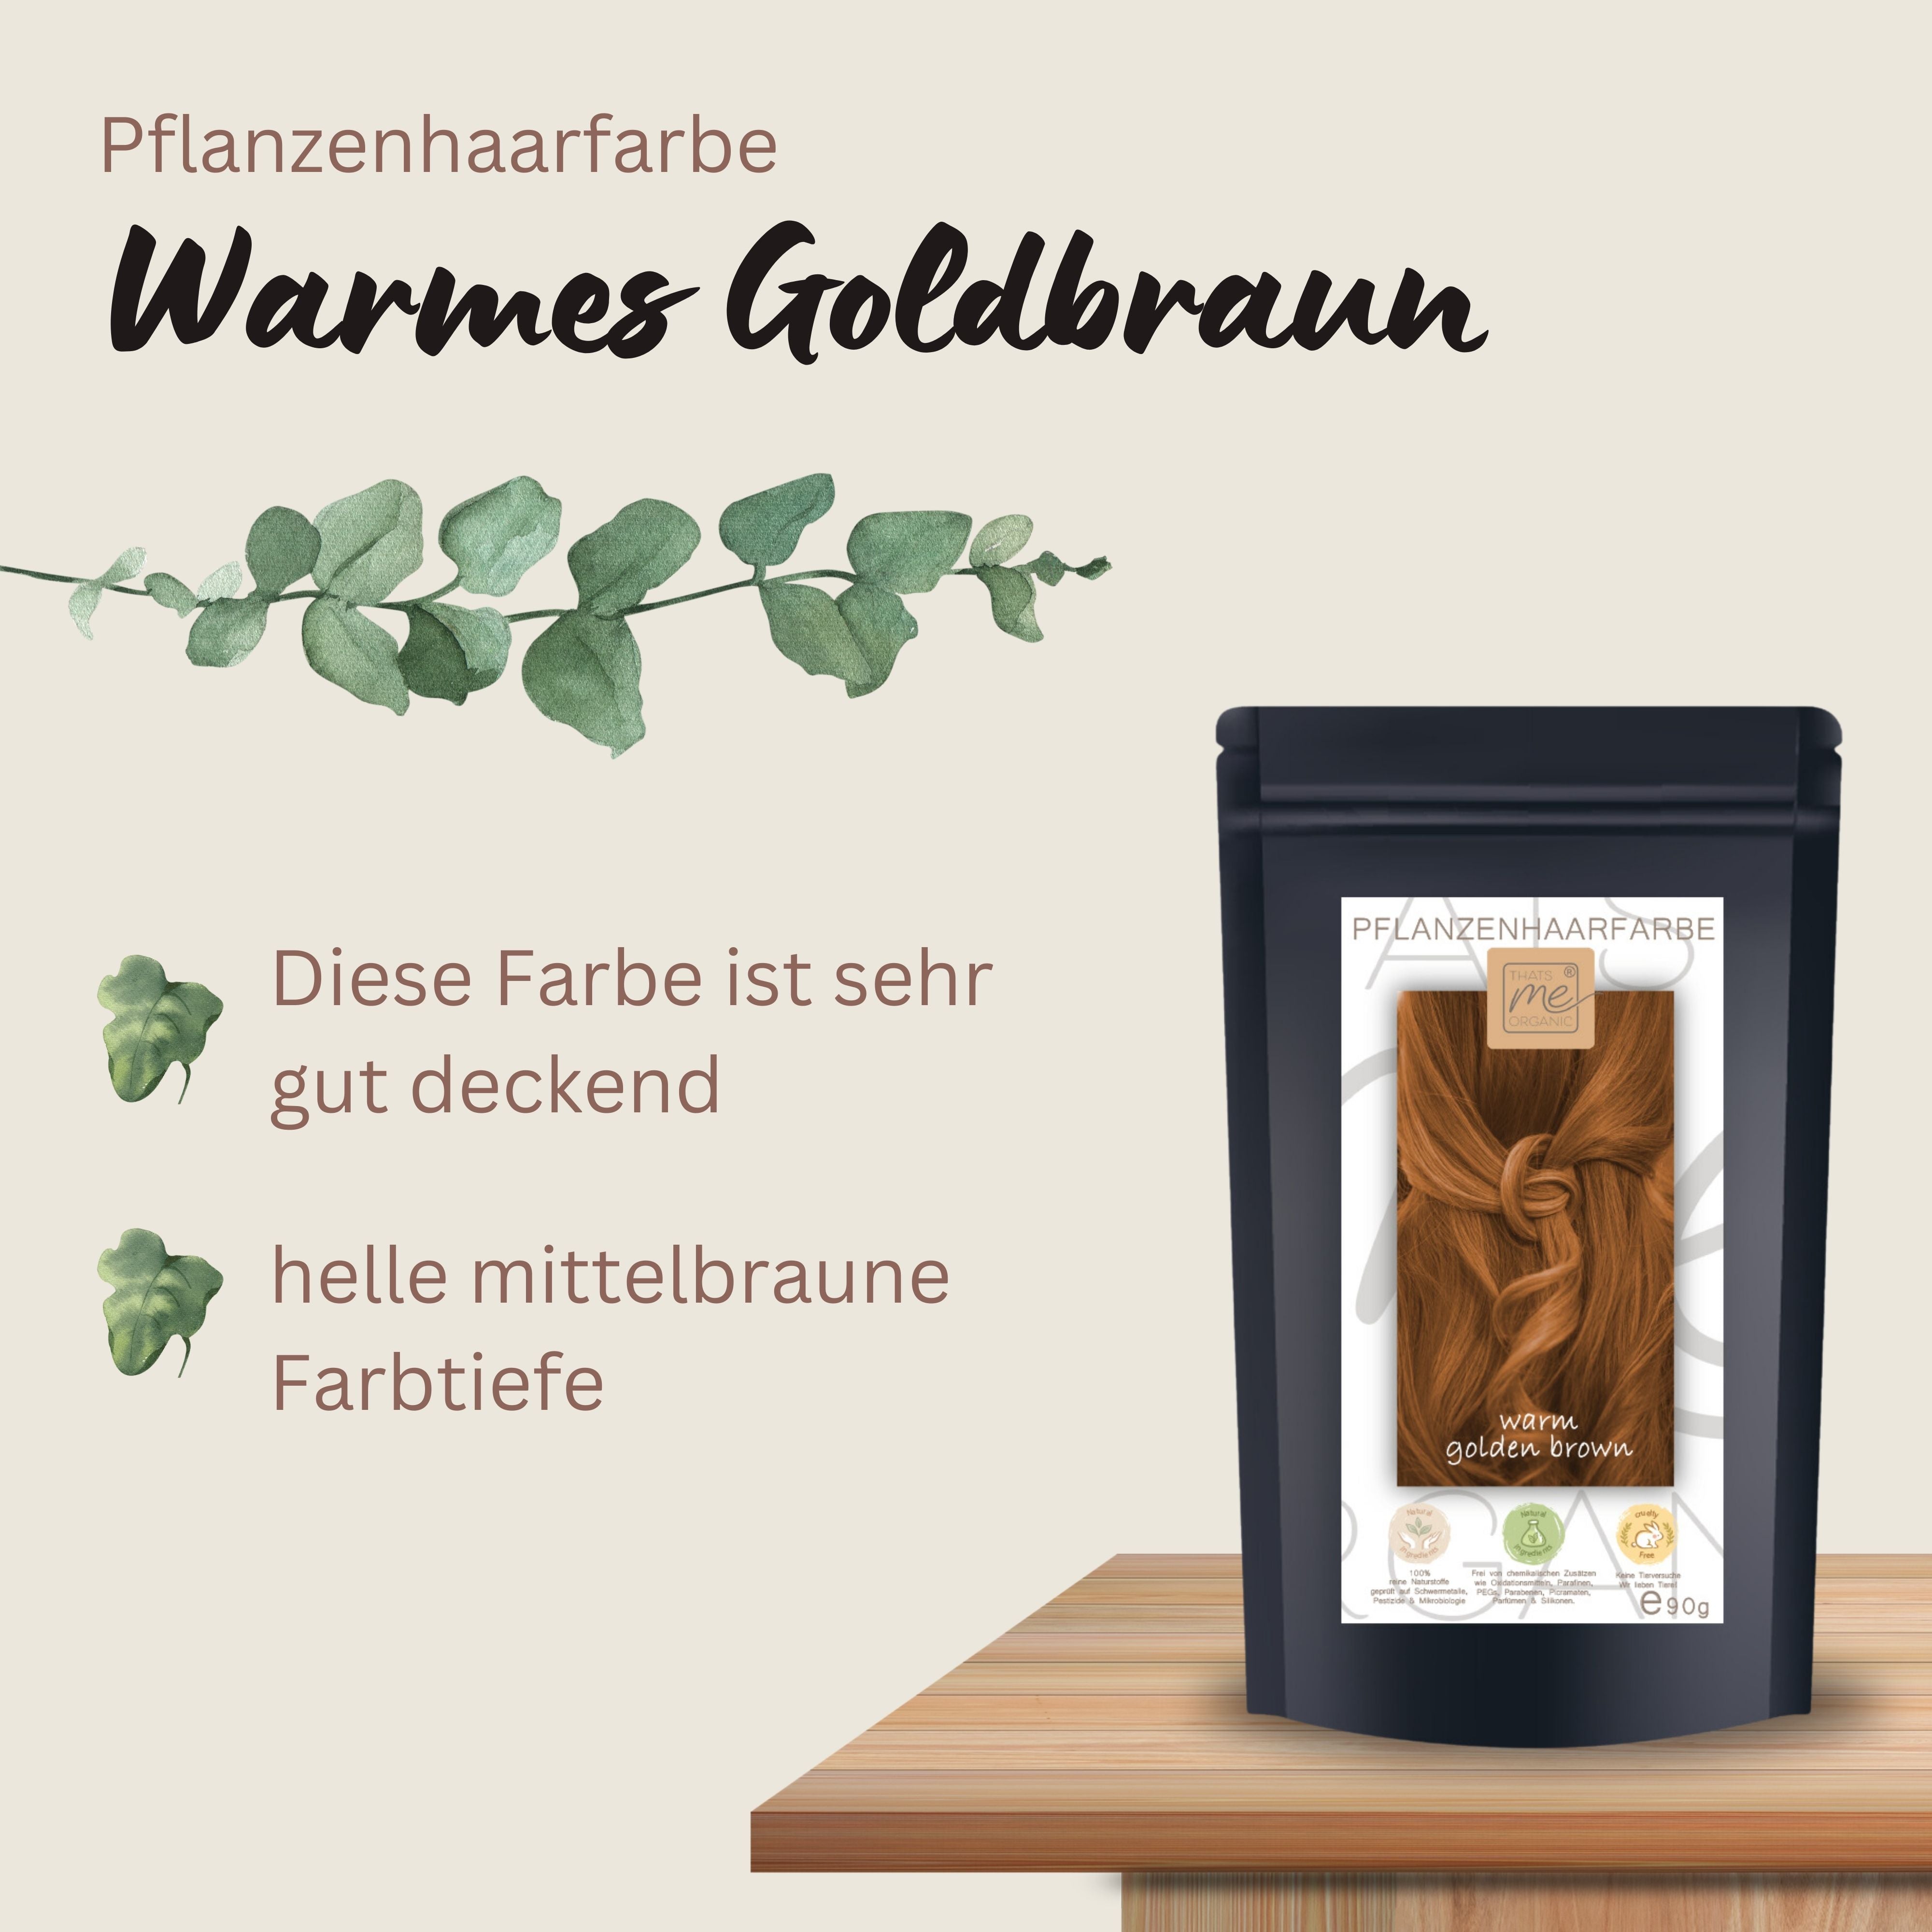 Profi-Pflanzenhaarfarbe SET warmes Gold-Braun "warm golden brown"